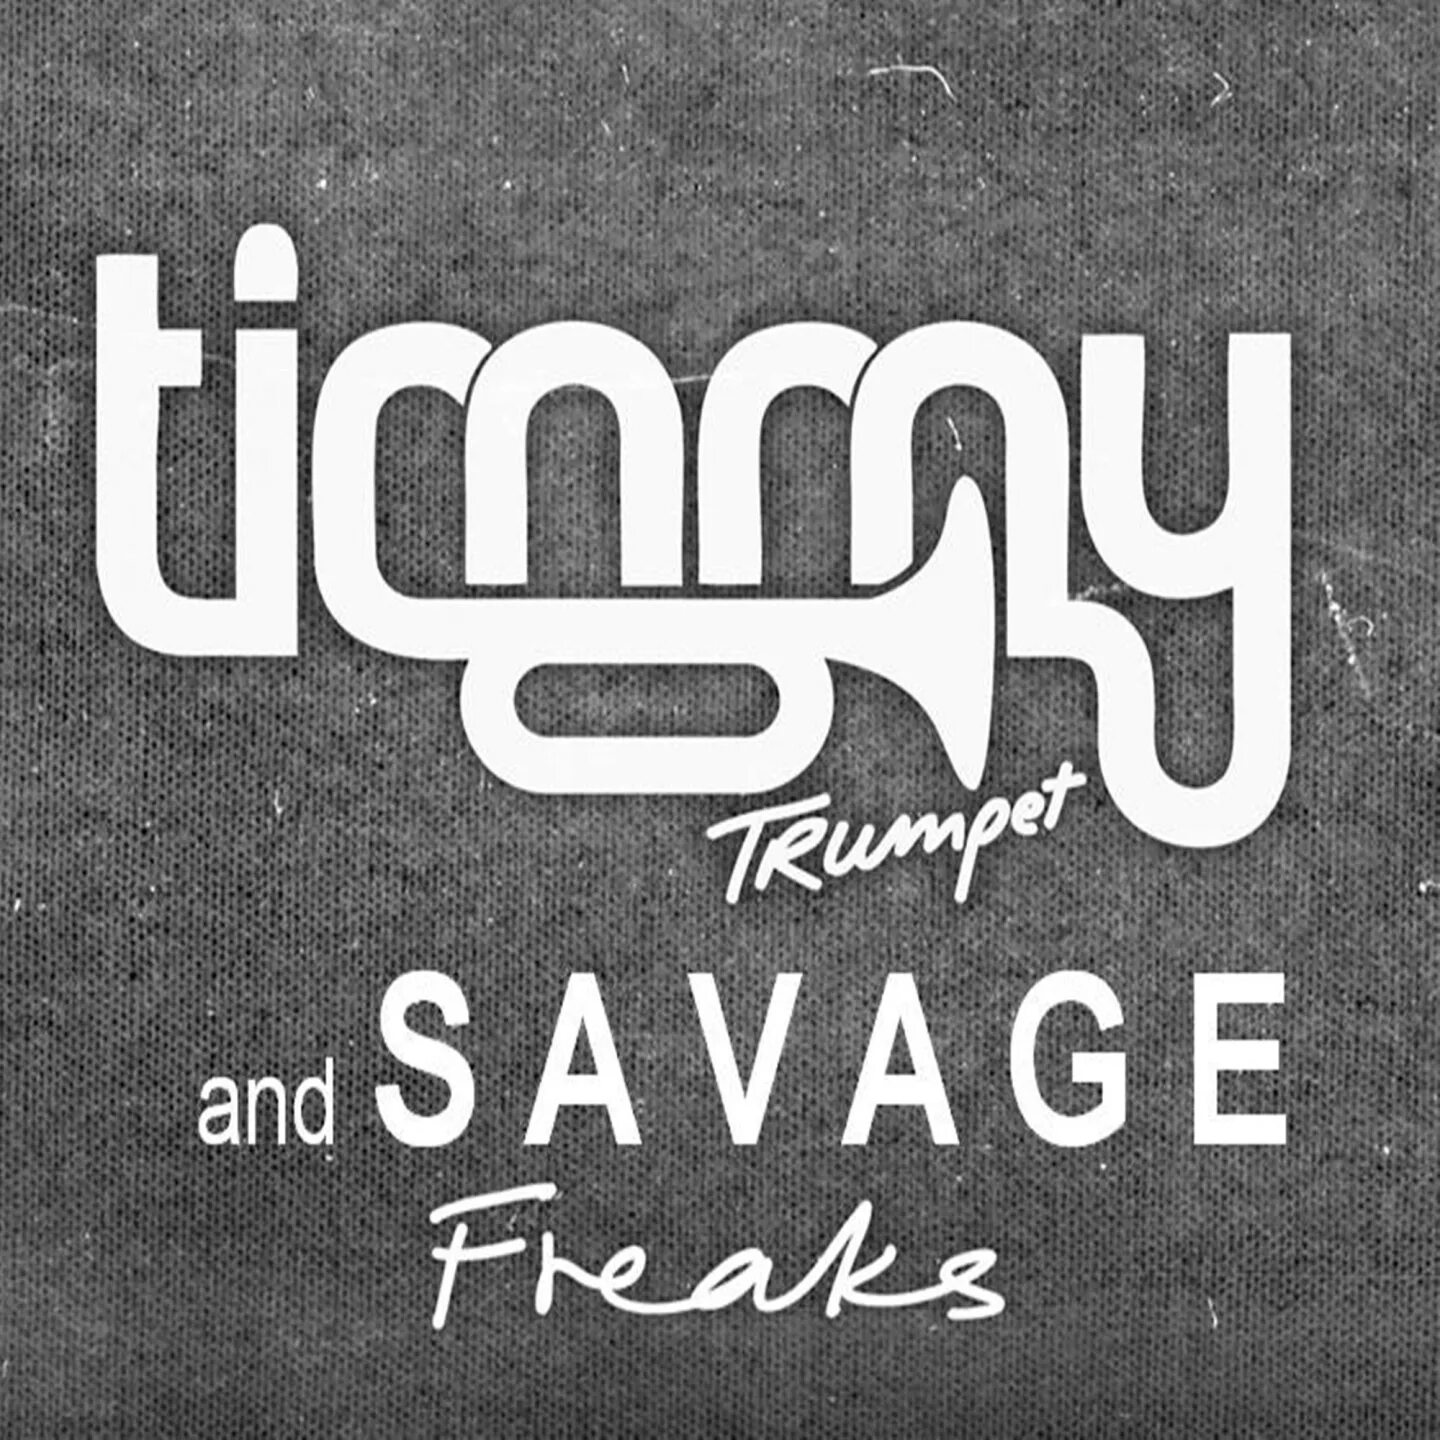 Freaks слушать. Тимми трампет Саведж. Timmy Trumpet Savage Freaks. Freaks обложка. Timmy Trumpet, Savage - Freaks обложка.